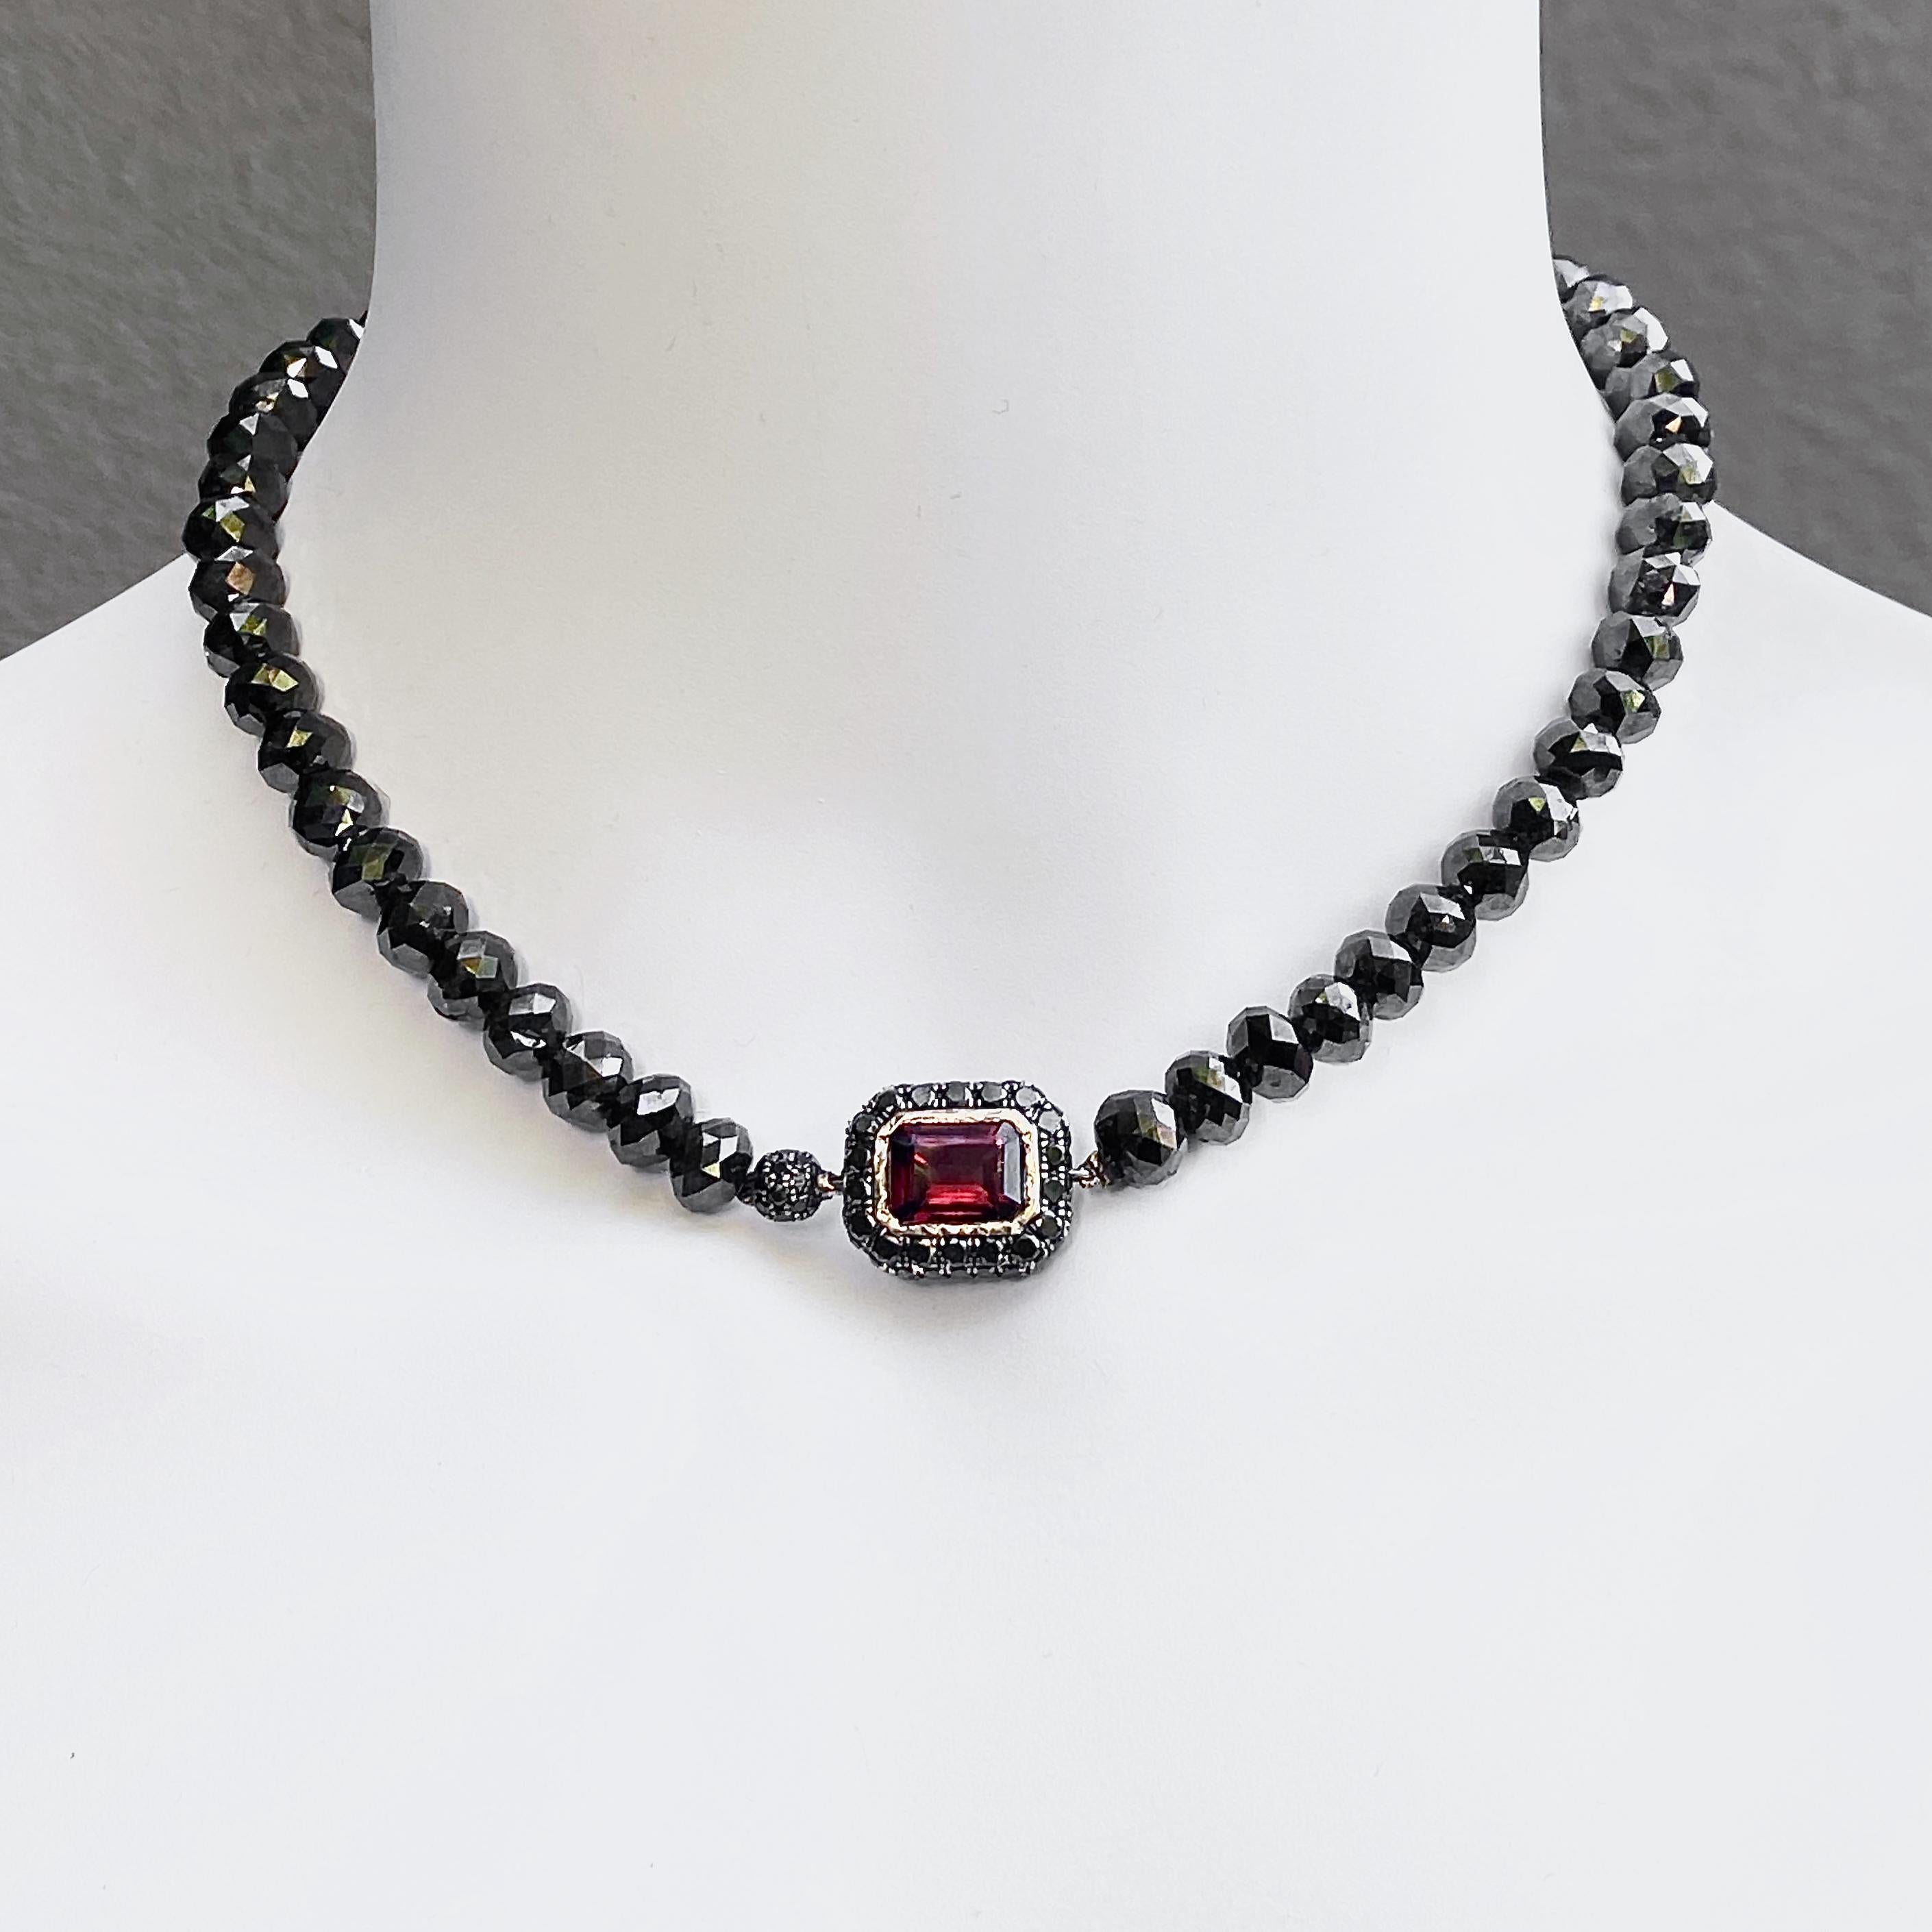 250 Carat Black Diamond Bead Choker Necklace with Garnet Clasp in 18 Karat Gold For Sale 2